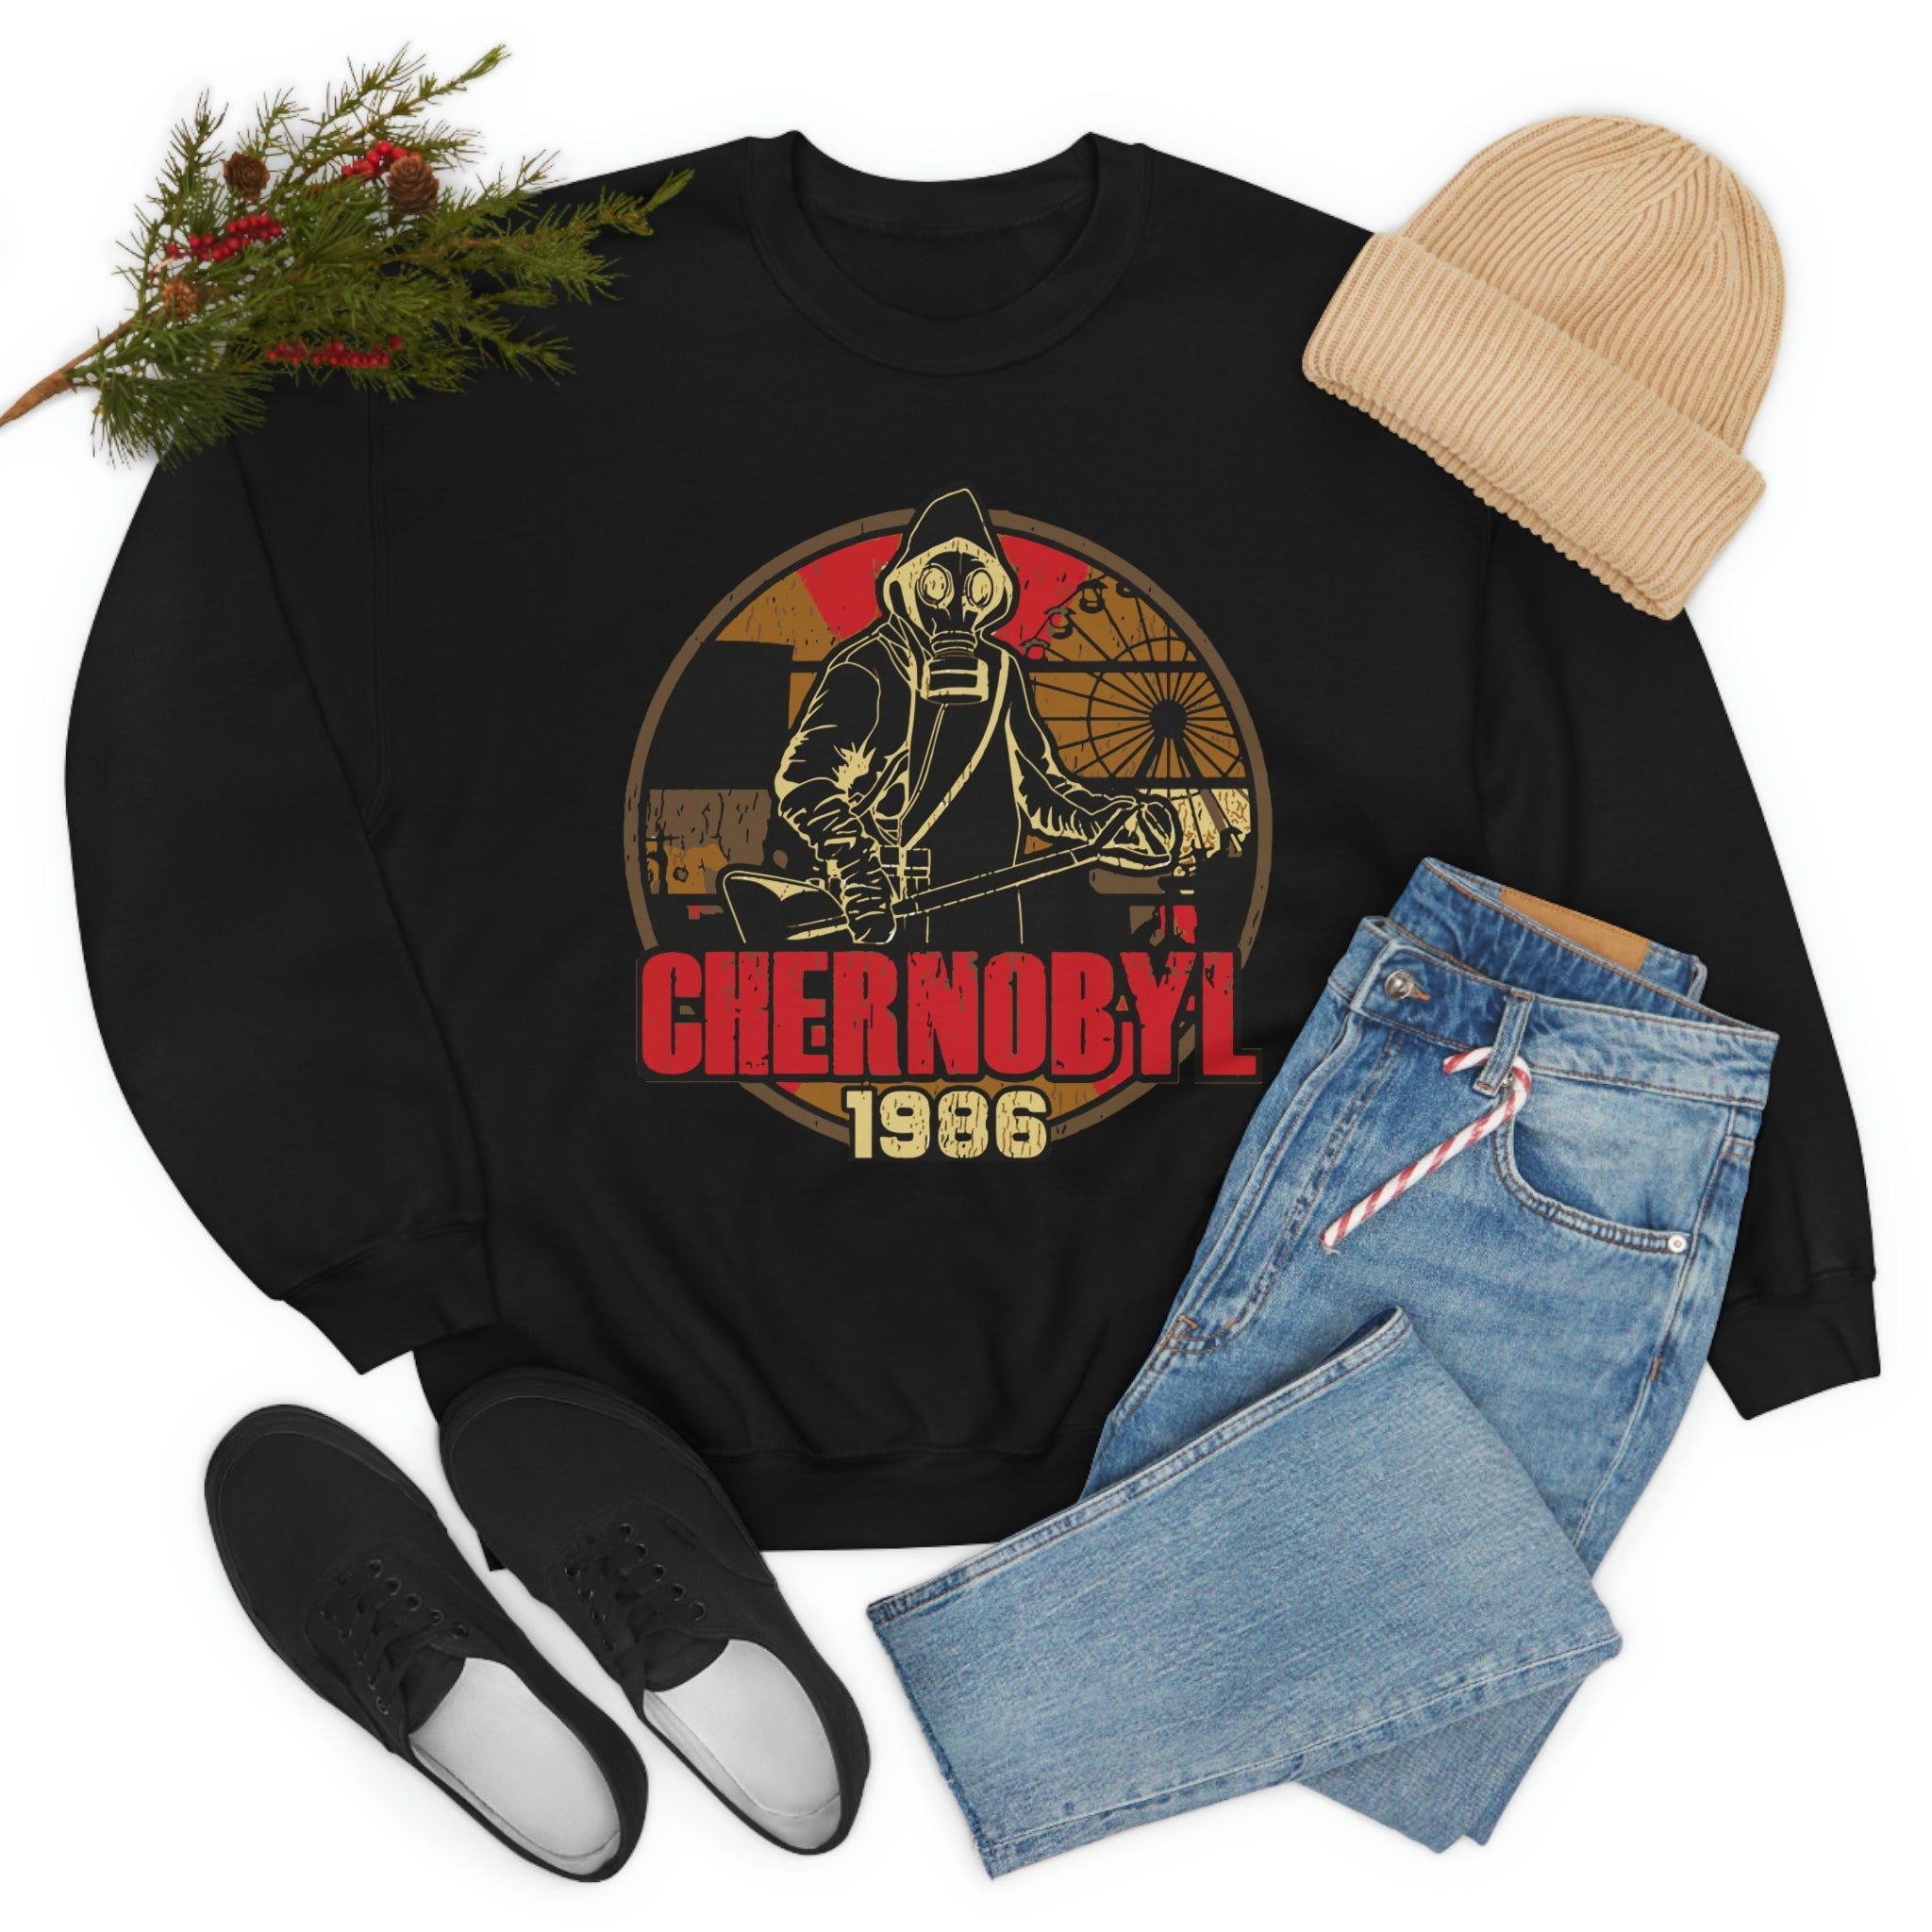 Chernobyl 1986 - Crewneck Sweatshirt